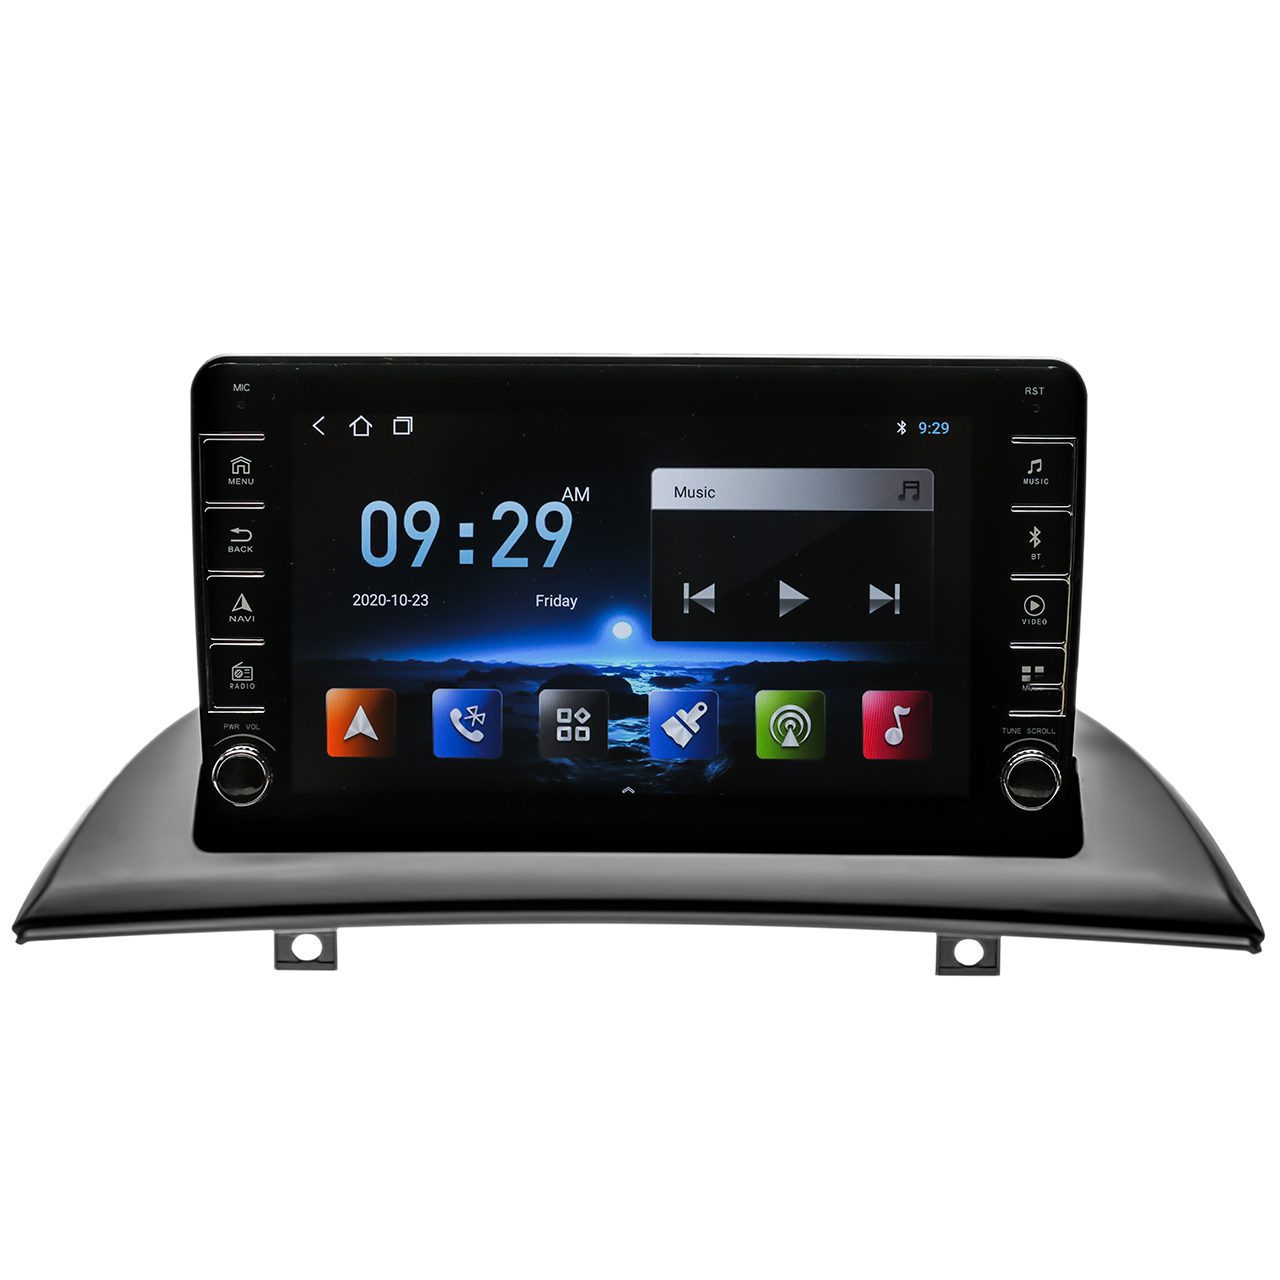 Navigatie AUTONAV PLUS Android GPS Dedicata BMW X3 E83, Model PRO Memorie 16GB Stocare, 1GB DDR3 RAM, Butoane Laterale Si Regulator Volum, Display 8